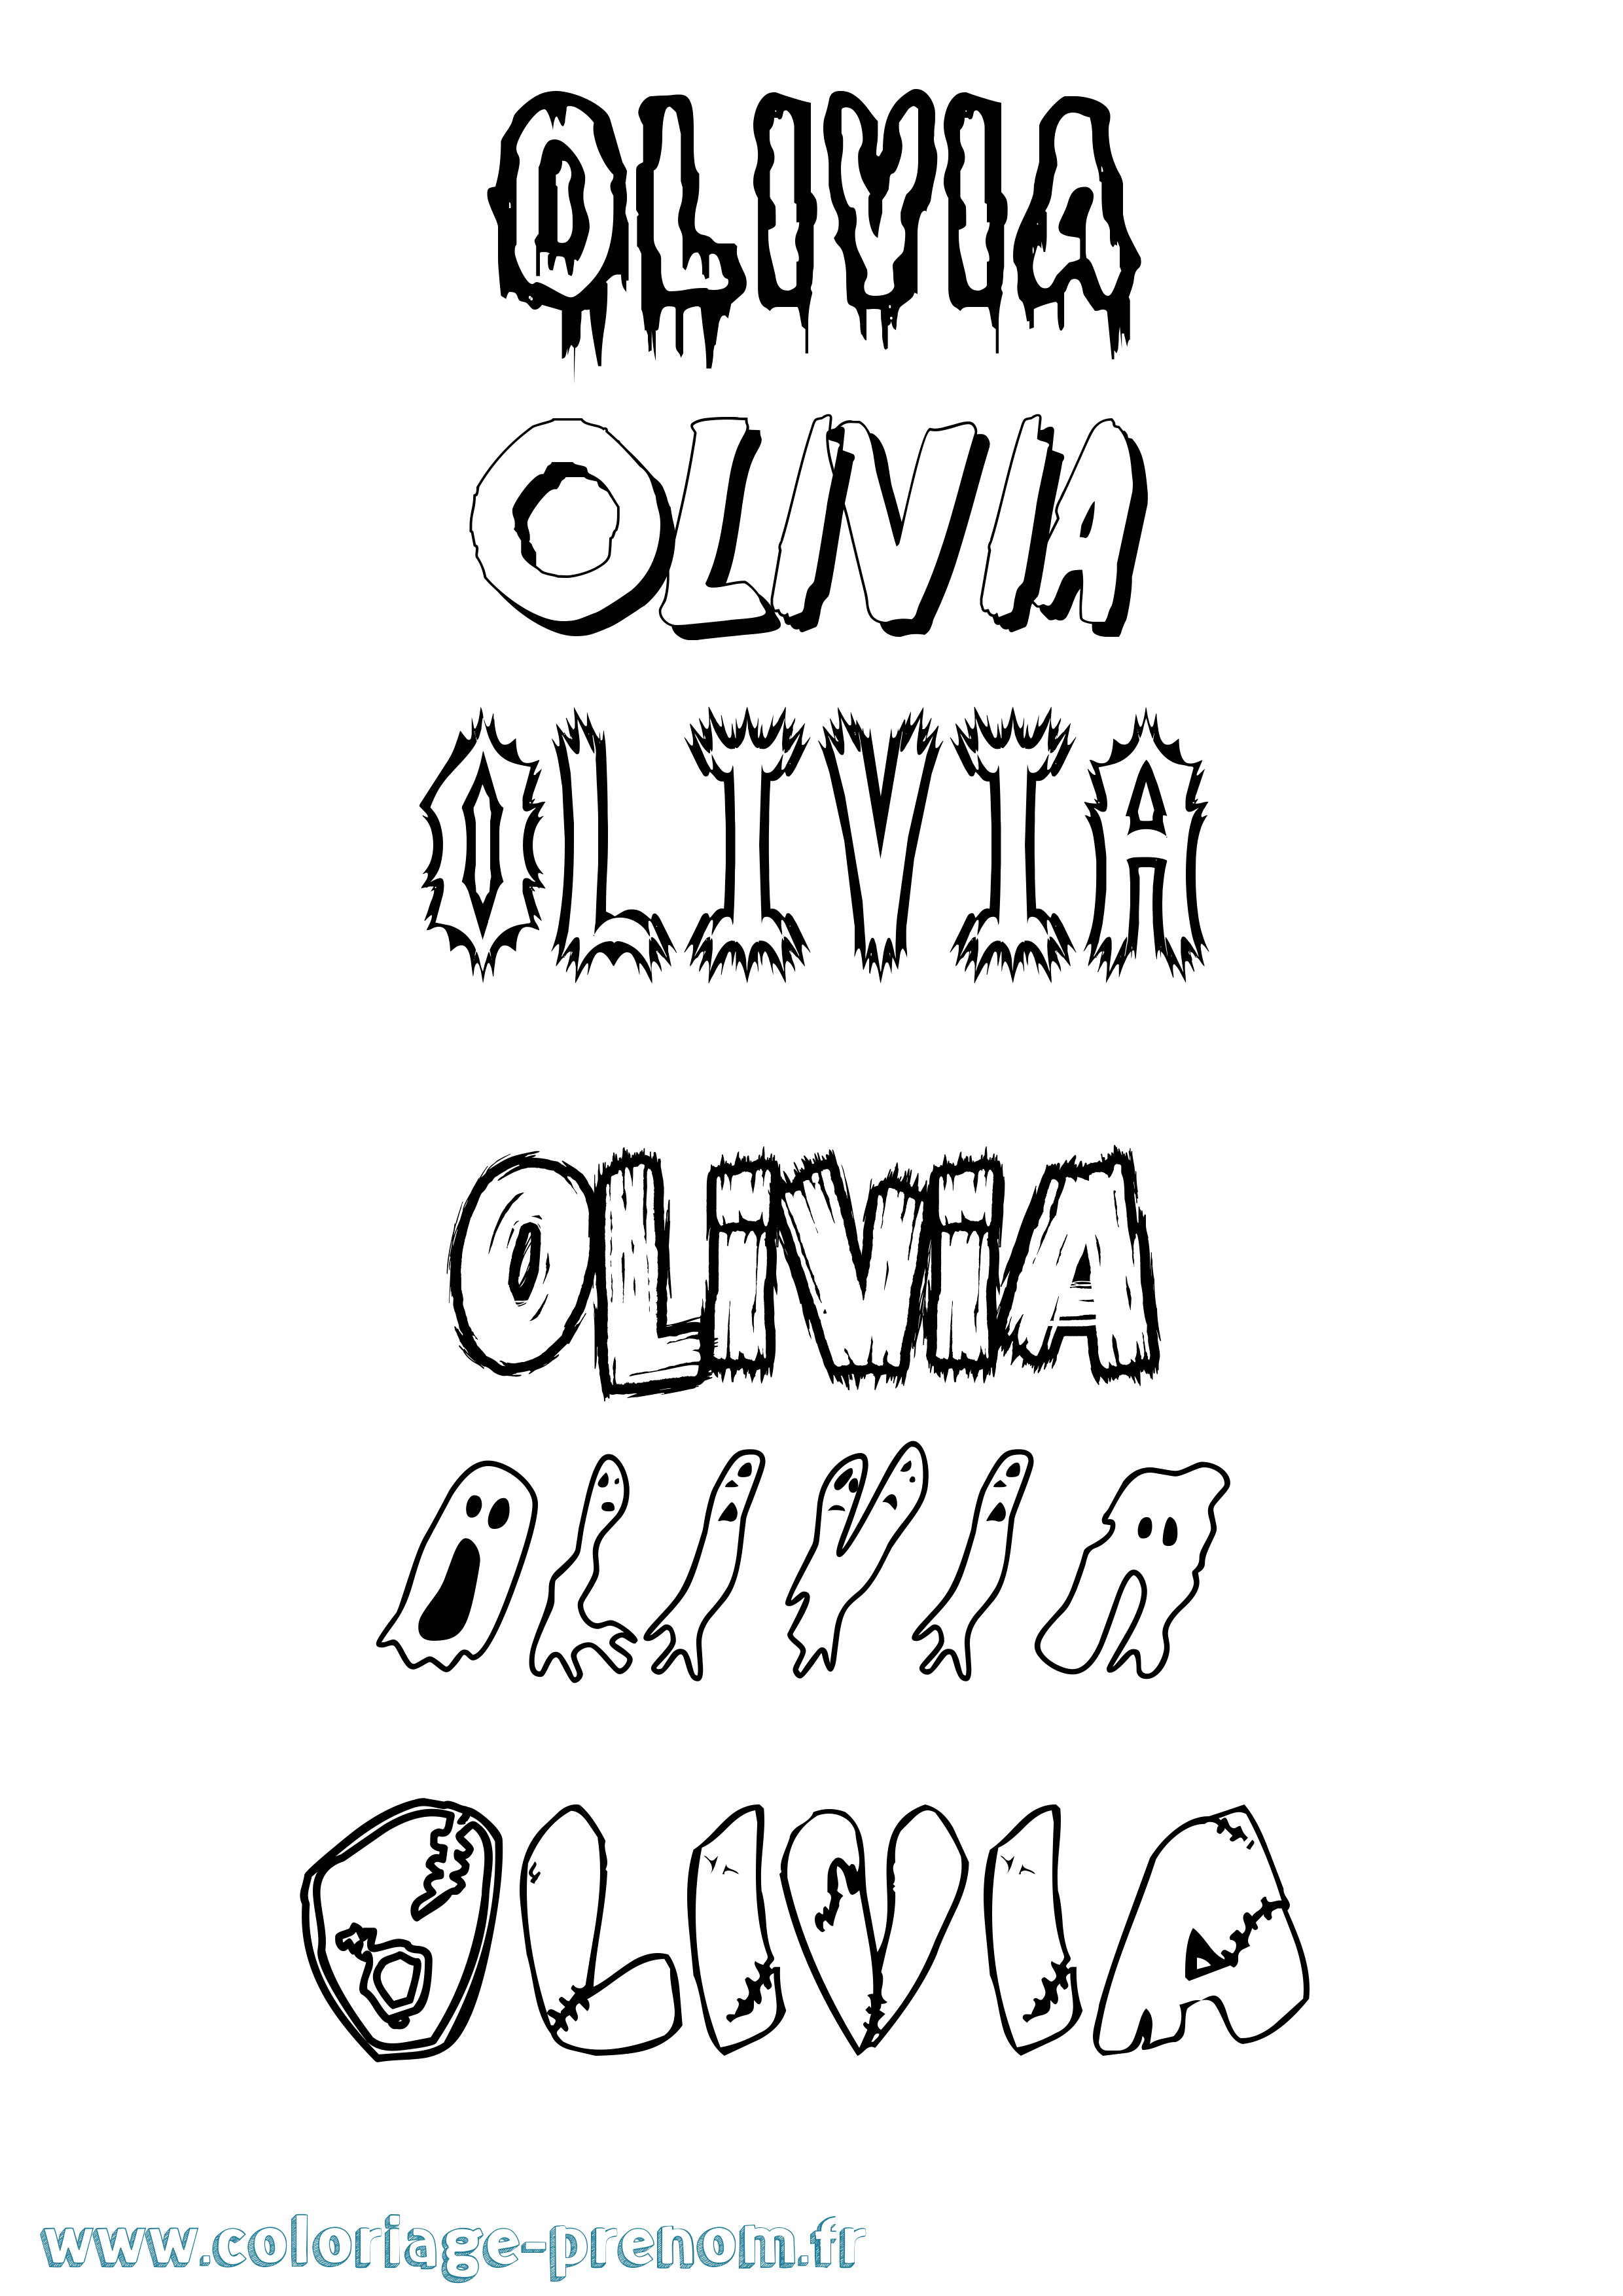 Coloriage prénom Olivia